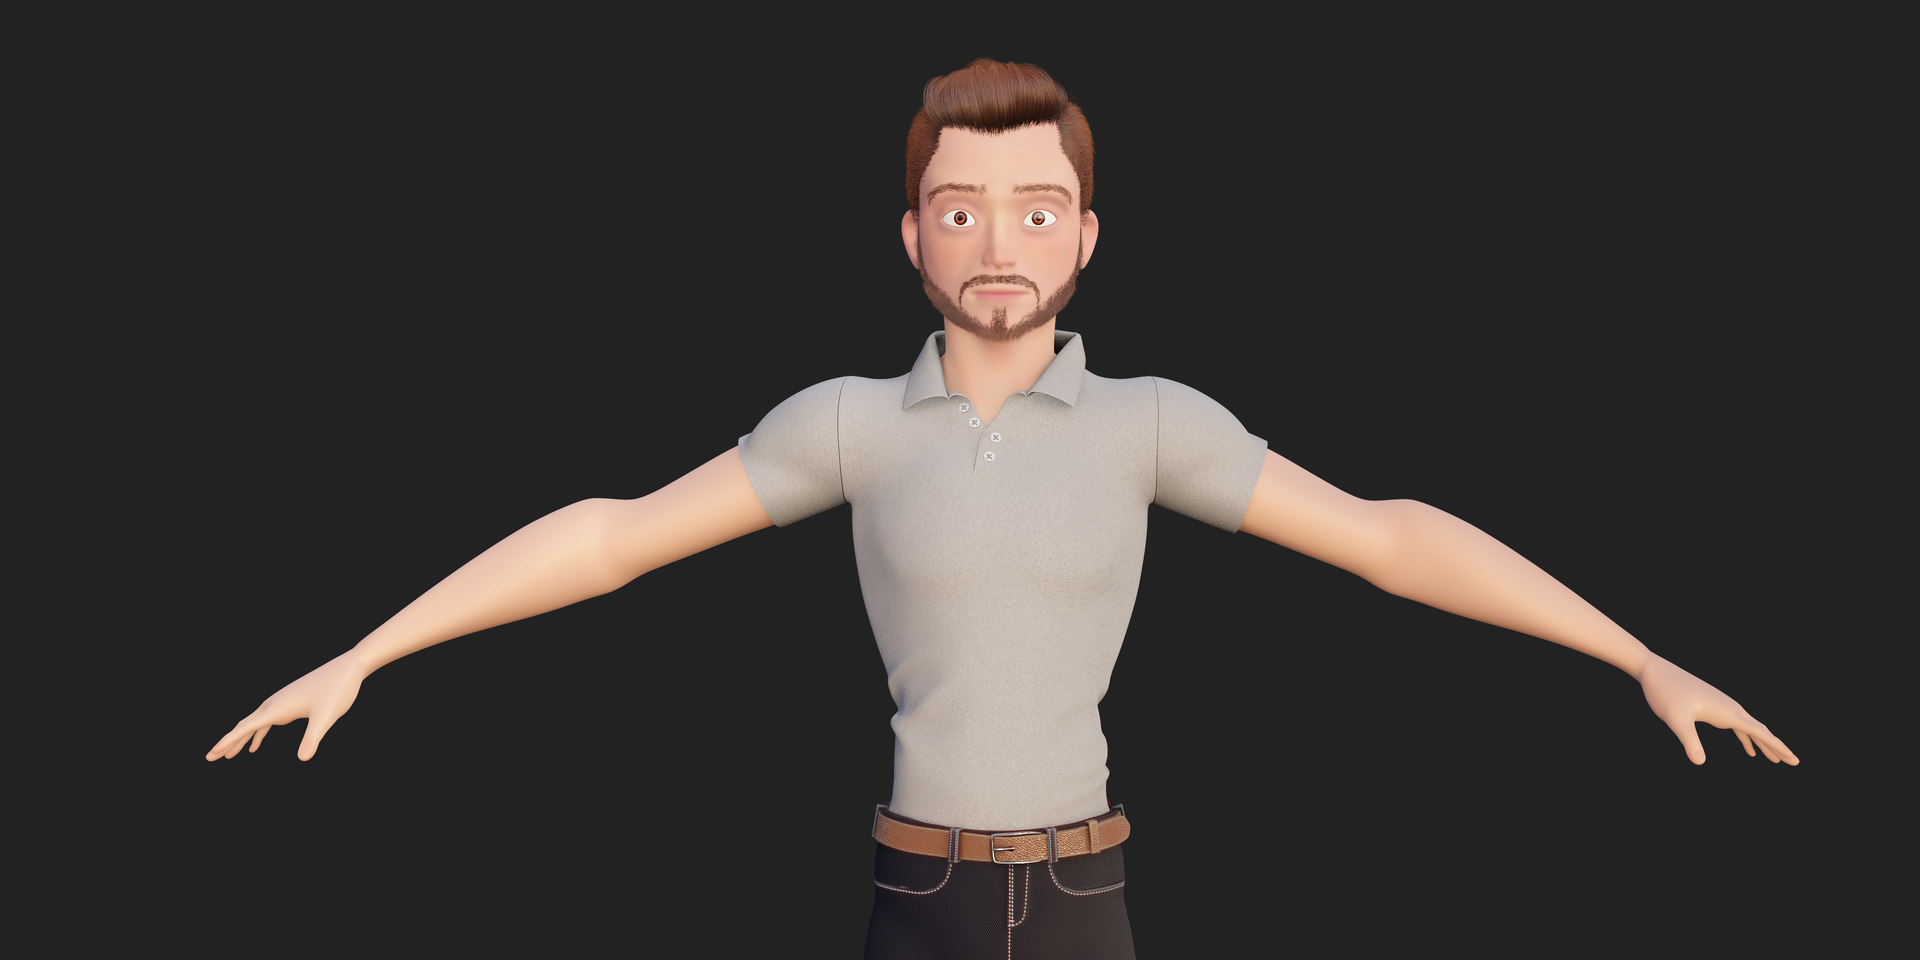 How To Make 3d Character Models In Blender - BEST GAMES WALKTHROUGH